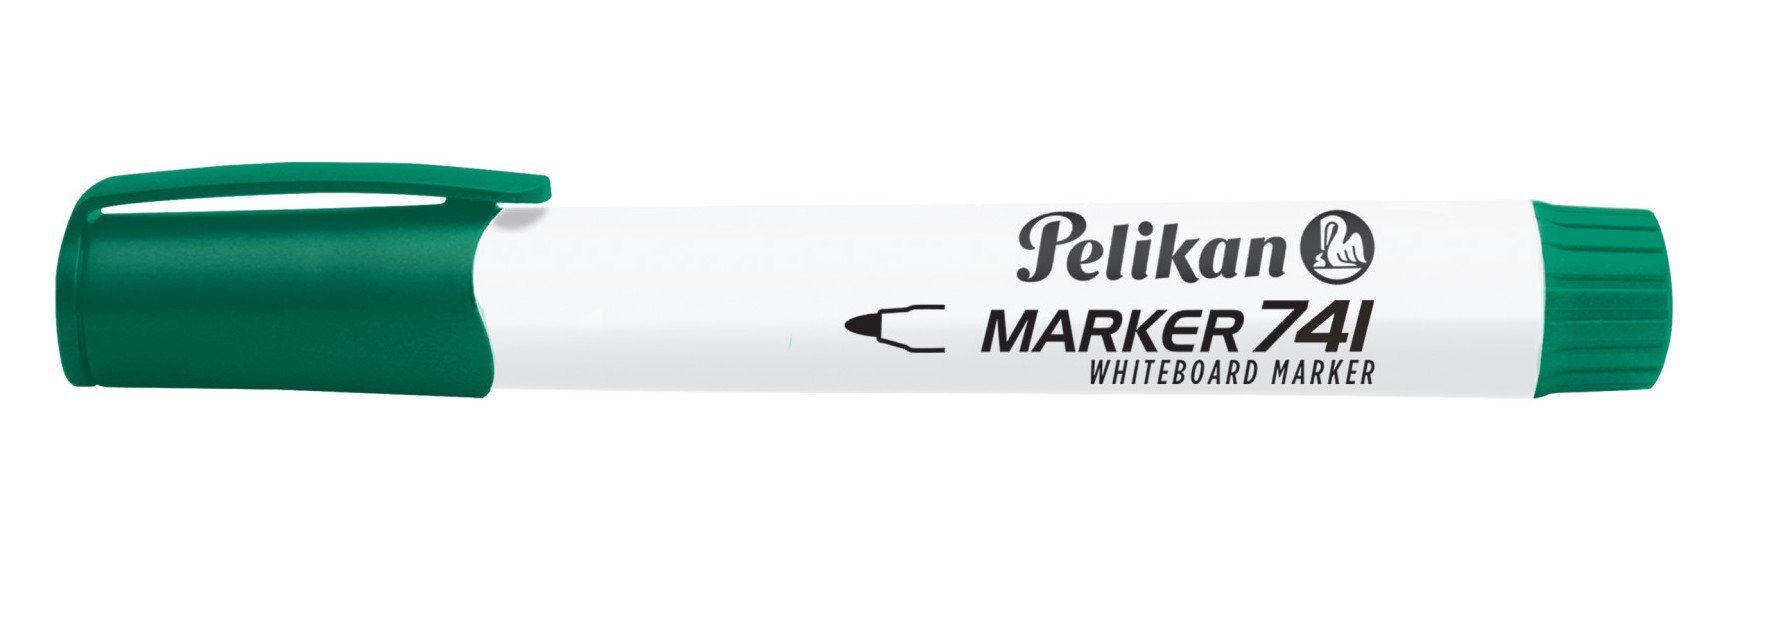 Pelikan Marker Pelikan grün 741 Whiteboard Marker